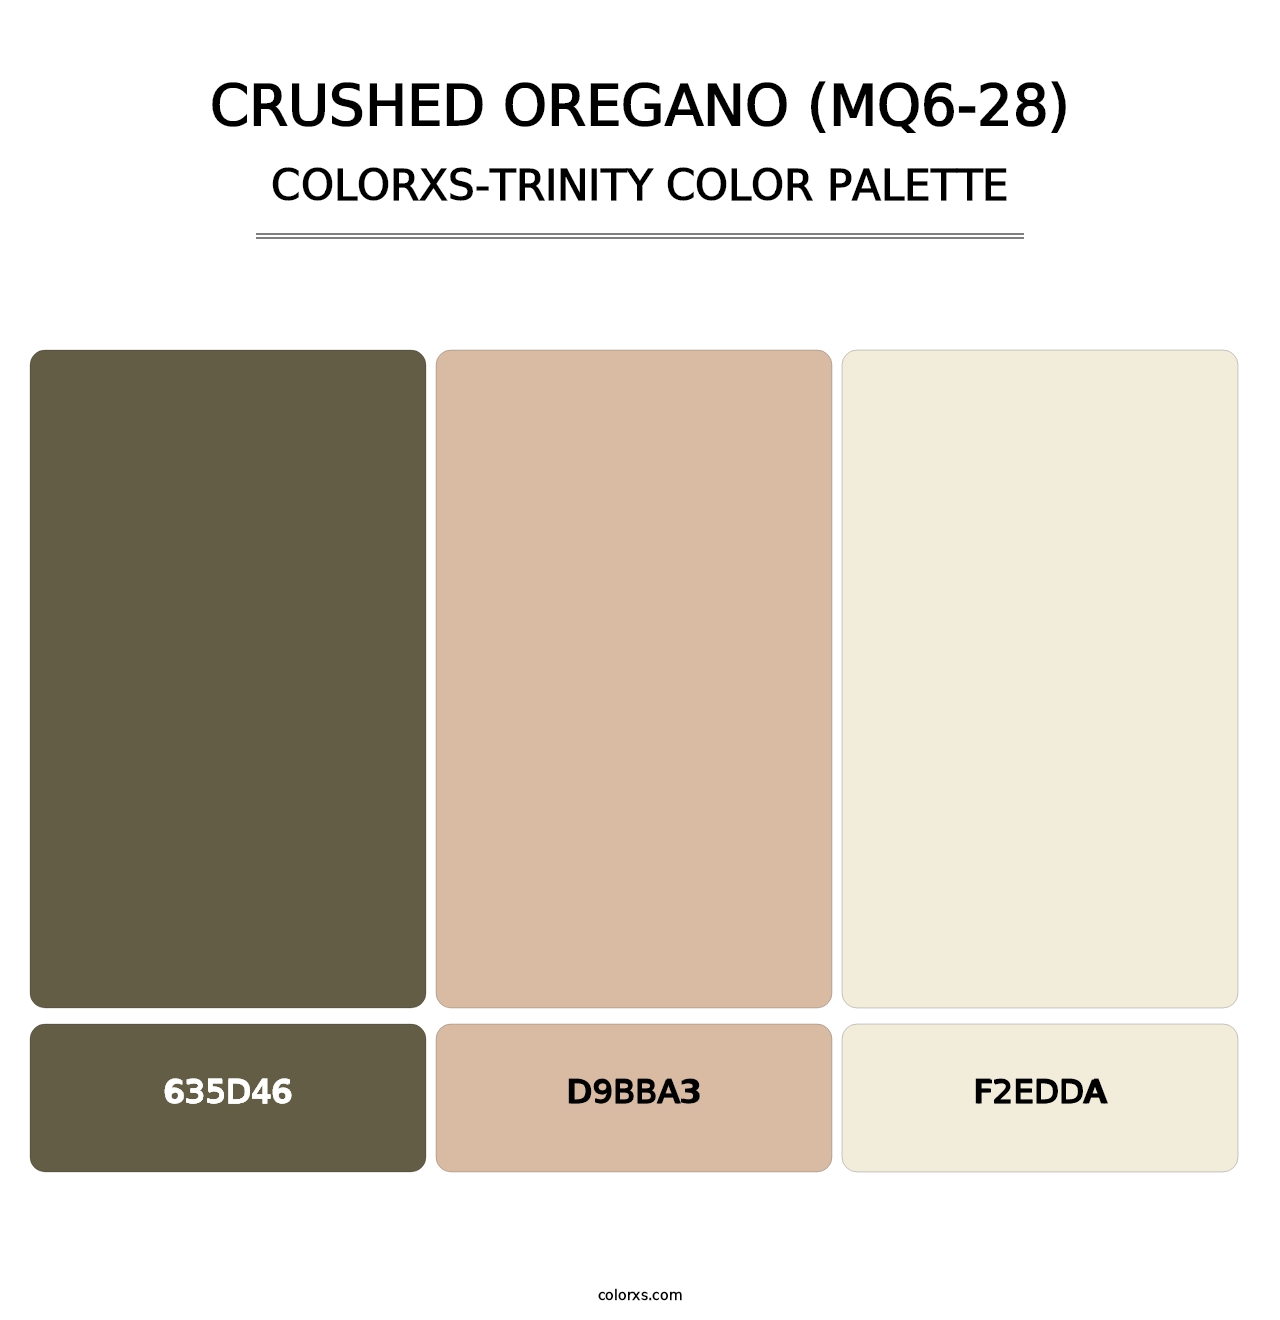 Crushed Oregano (MQ6-28) - Colorxs Trinity Palette